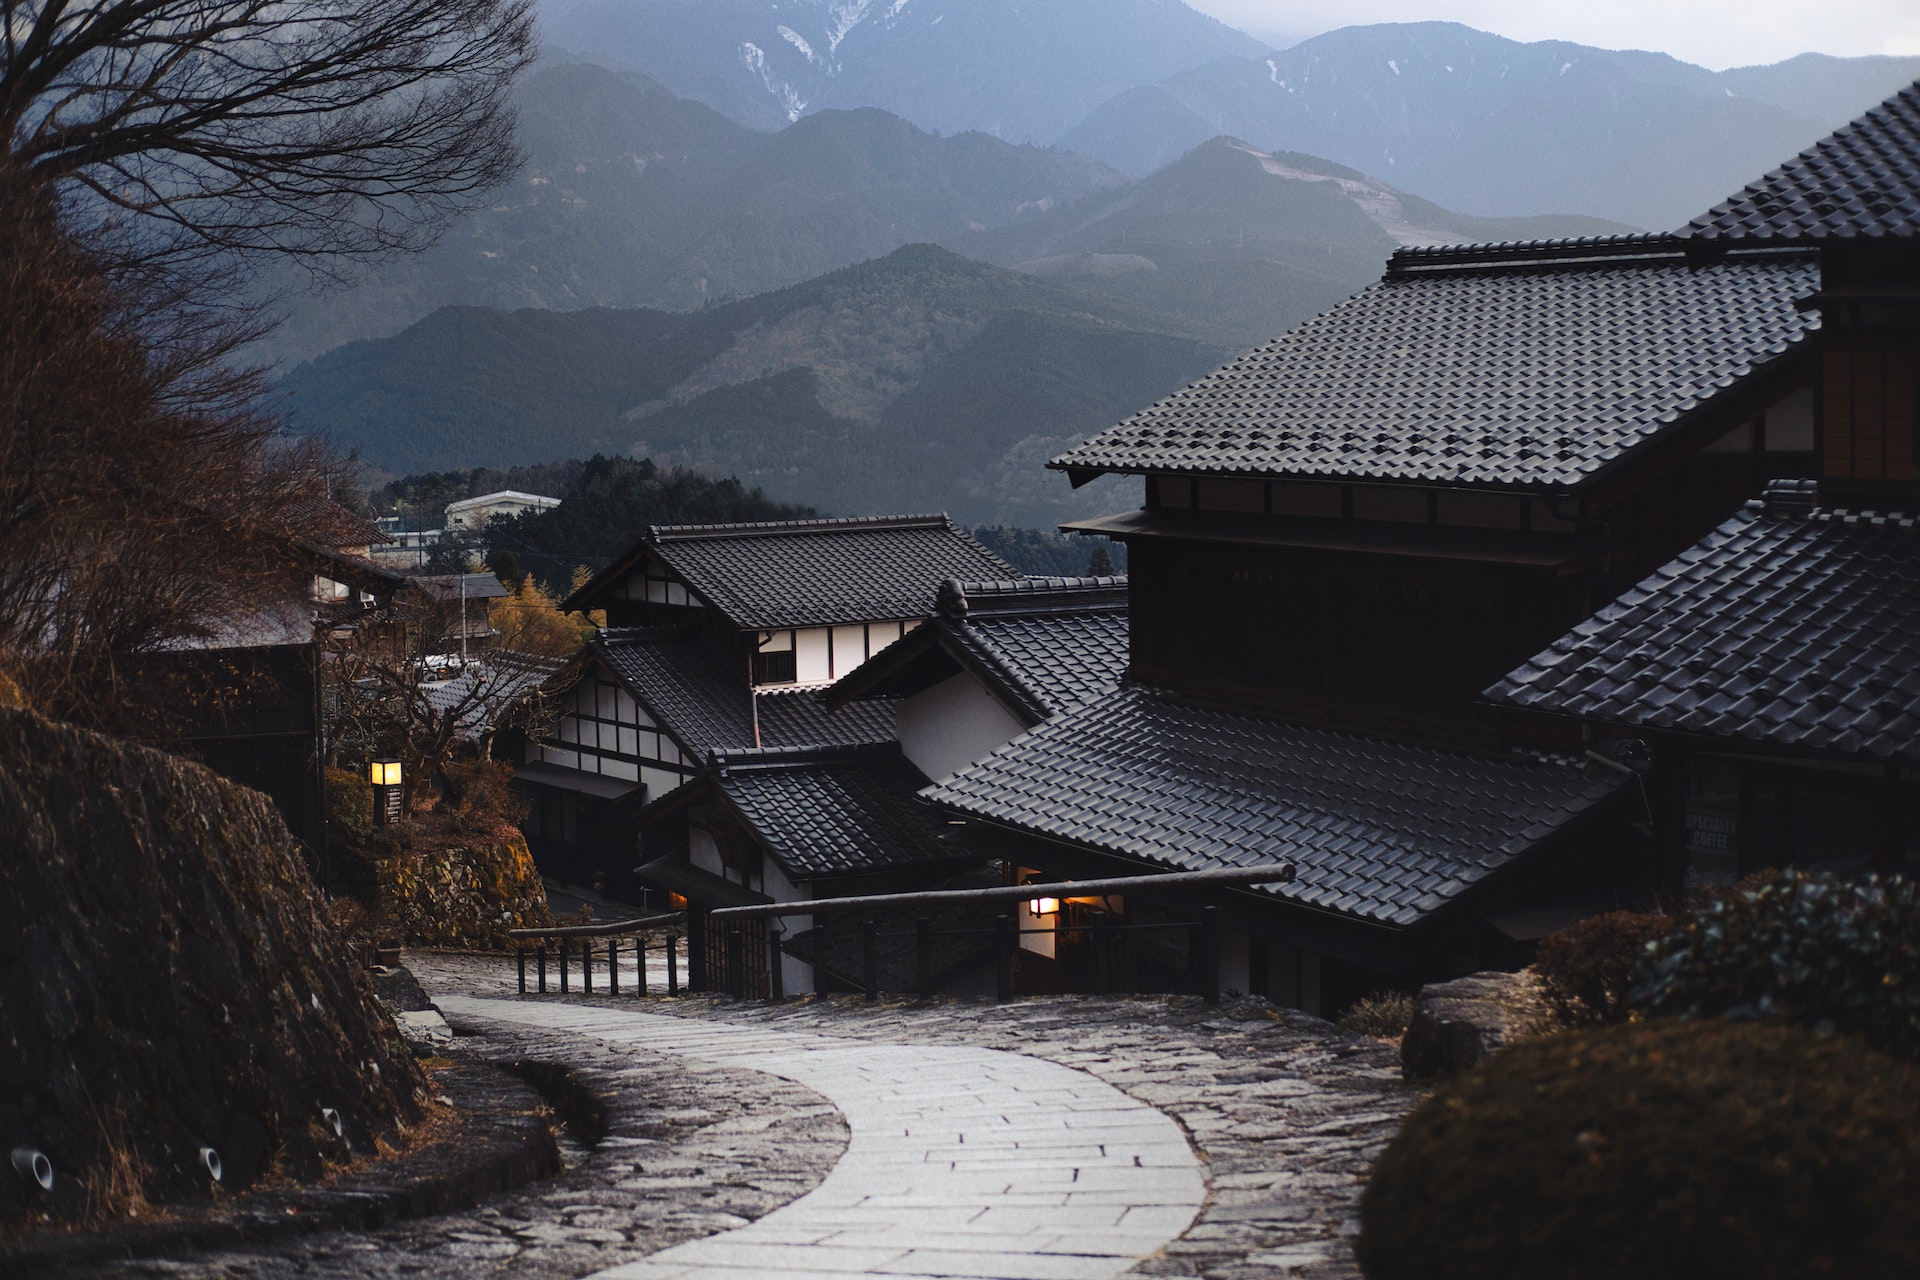 Japan Photo by Evgeny Tchebotarev on Pexels